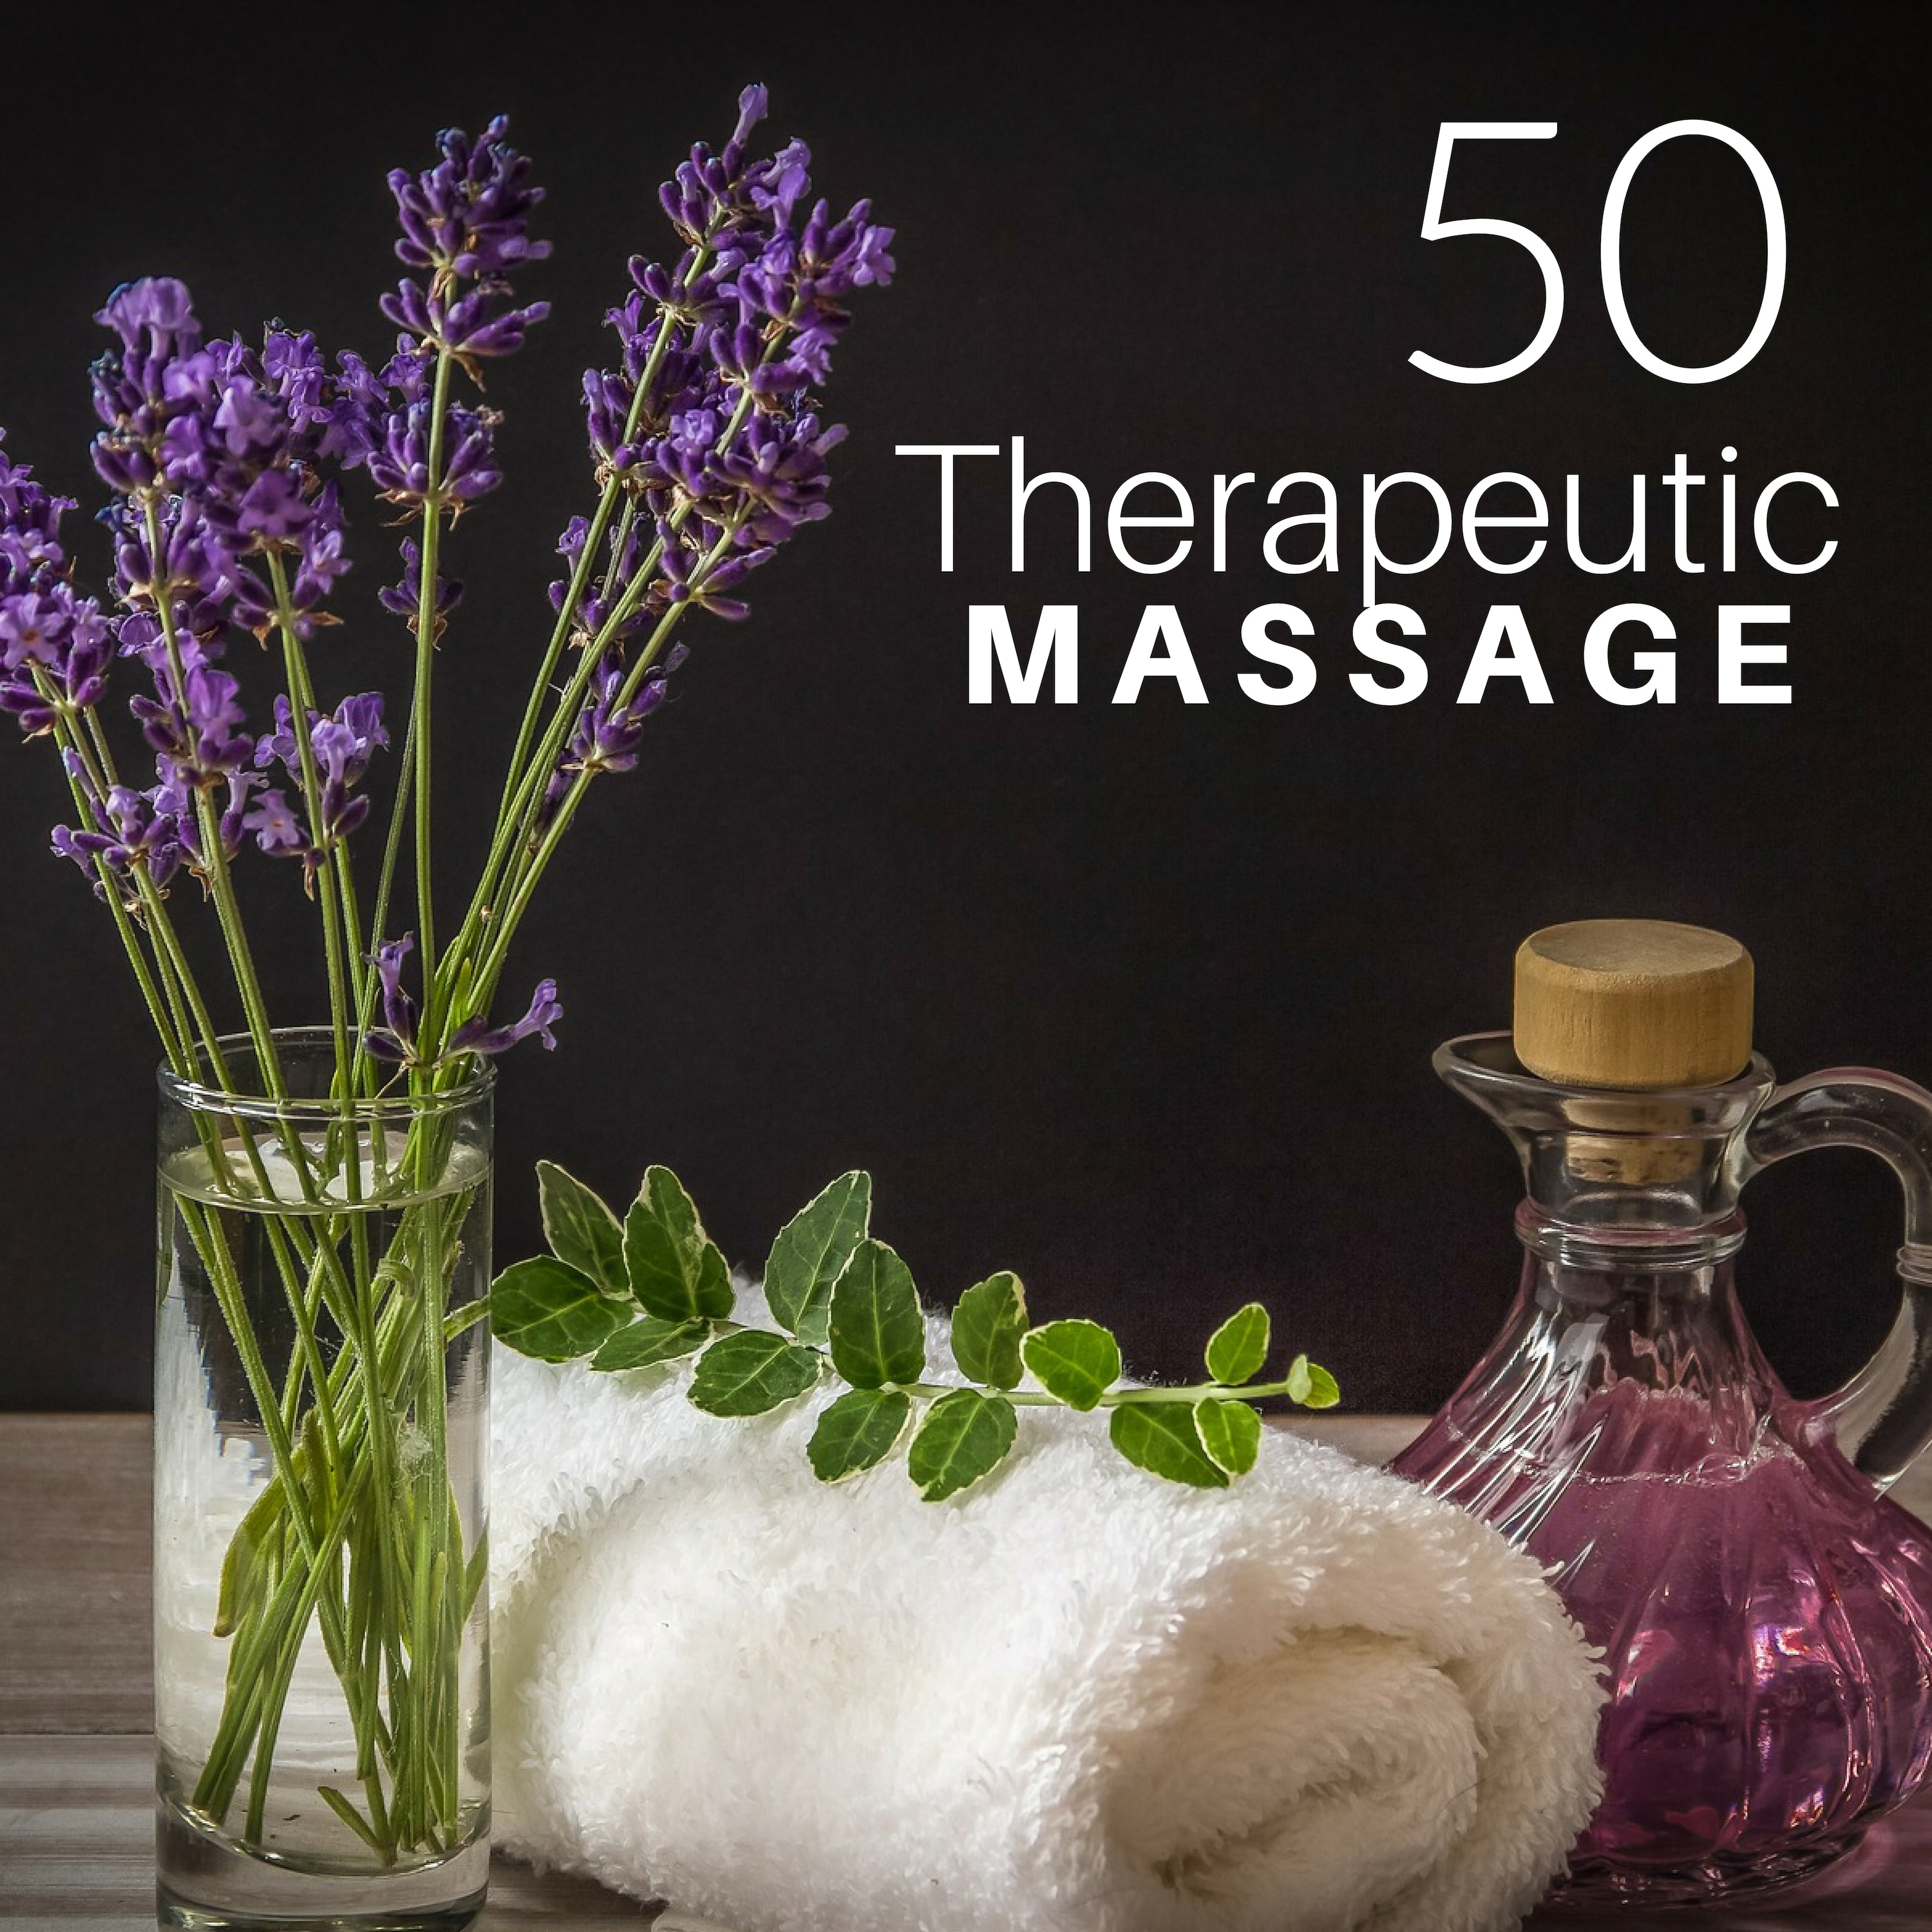 Therapeutic Massage 50 - Wellness Music, Buddhist Songs, Zen Music